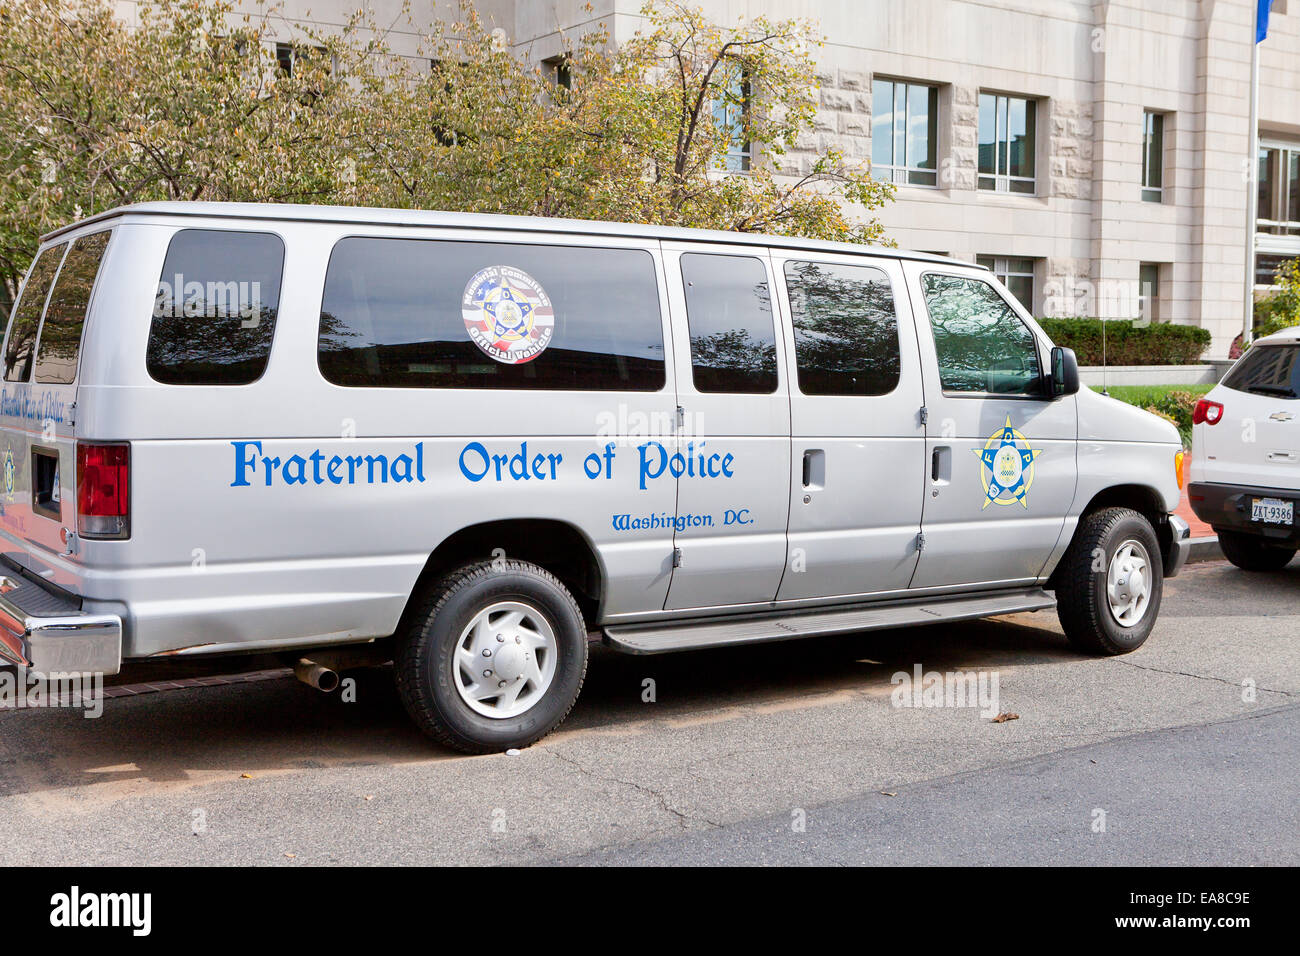 Fraternal Order of Police van - Washington, DC USA Stock Photo